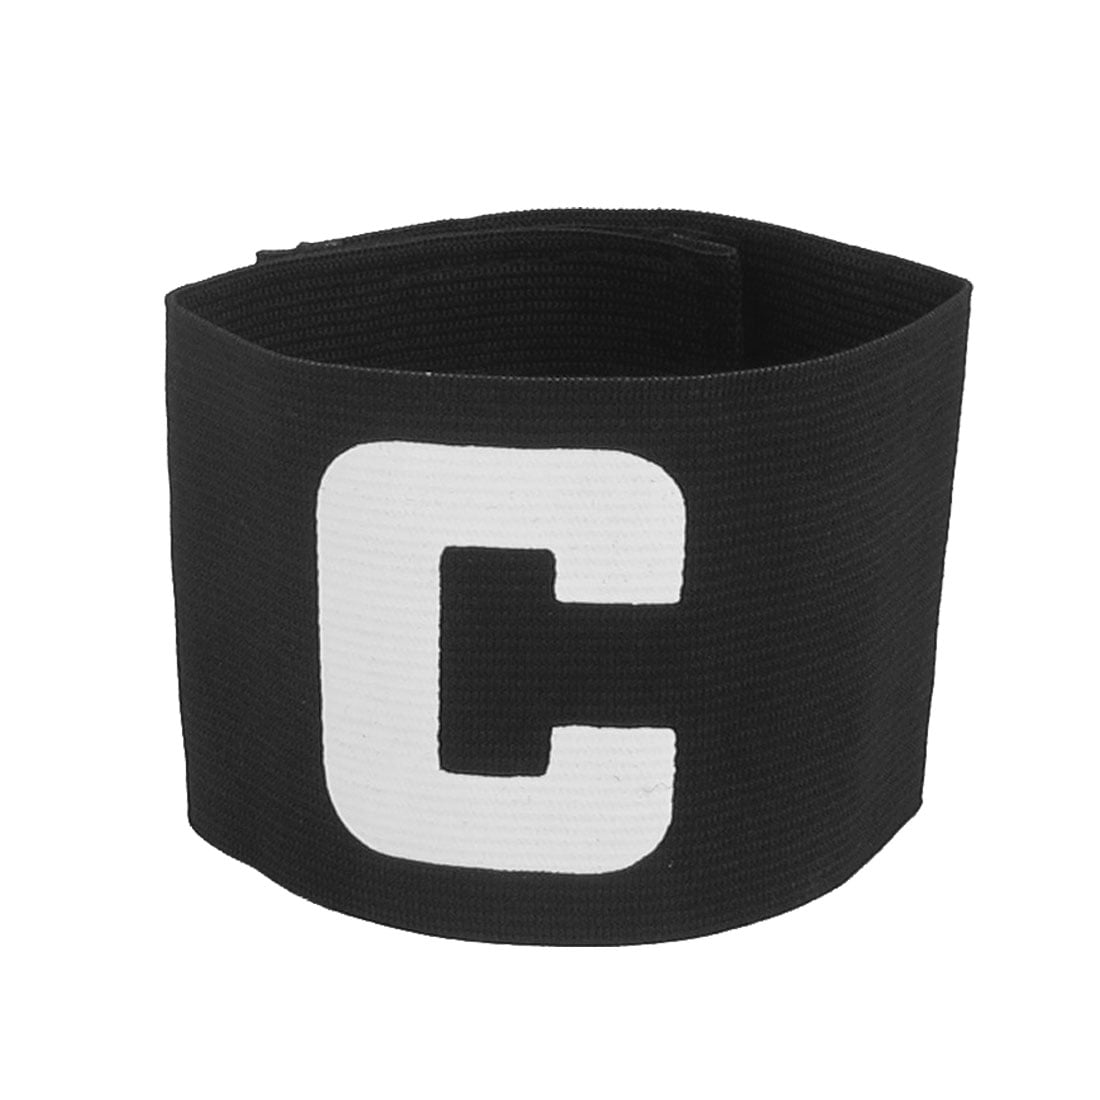 C Letter Gear Flexible Armband Adjustable Football Soccer Sports Captain Band 